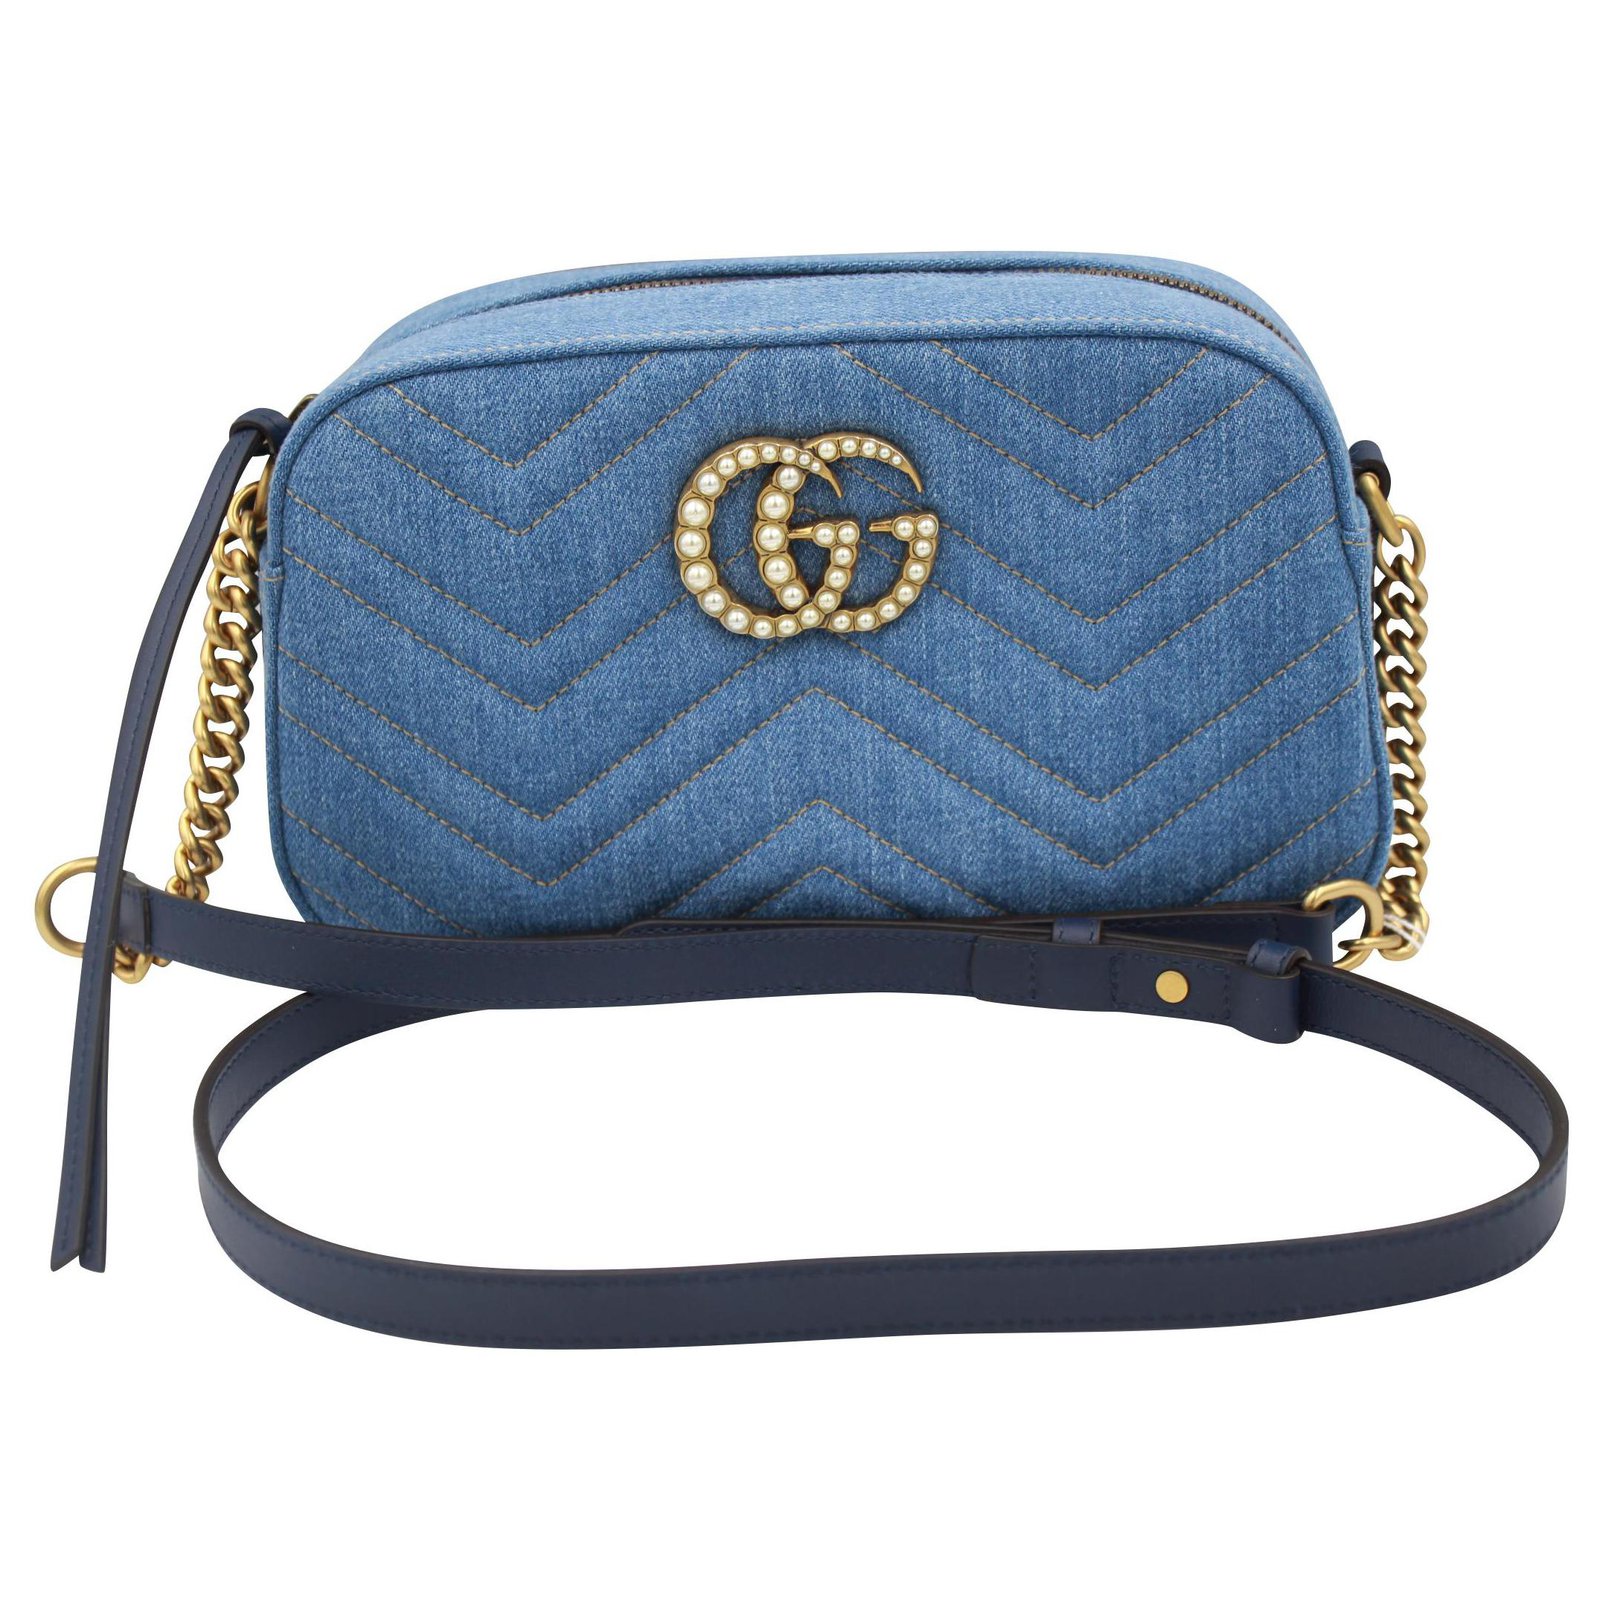 Gucci Handbags Handbags Denim Blue ref 